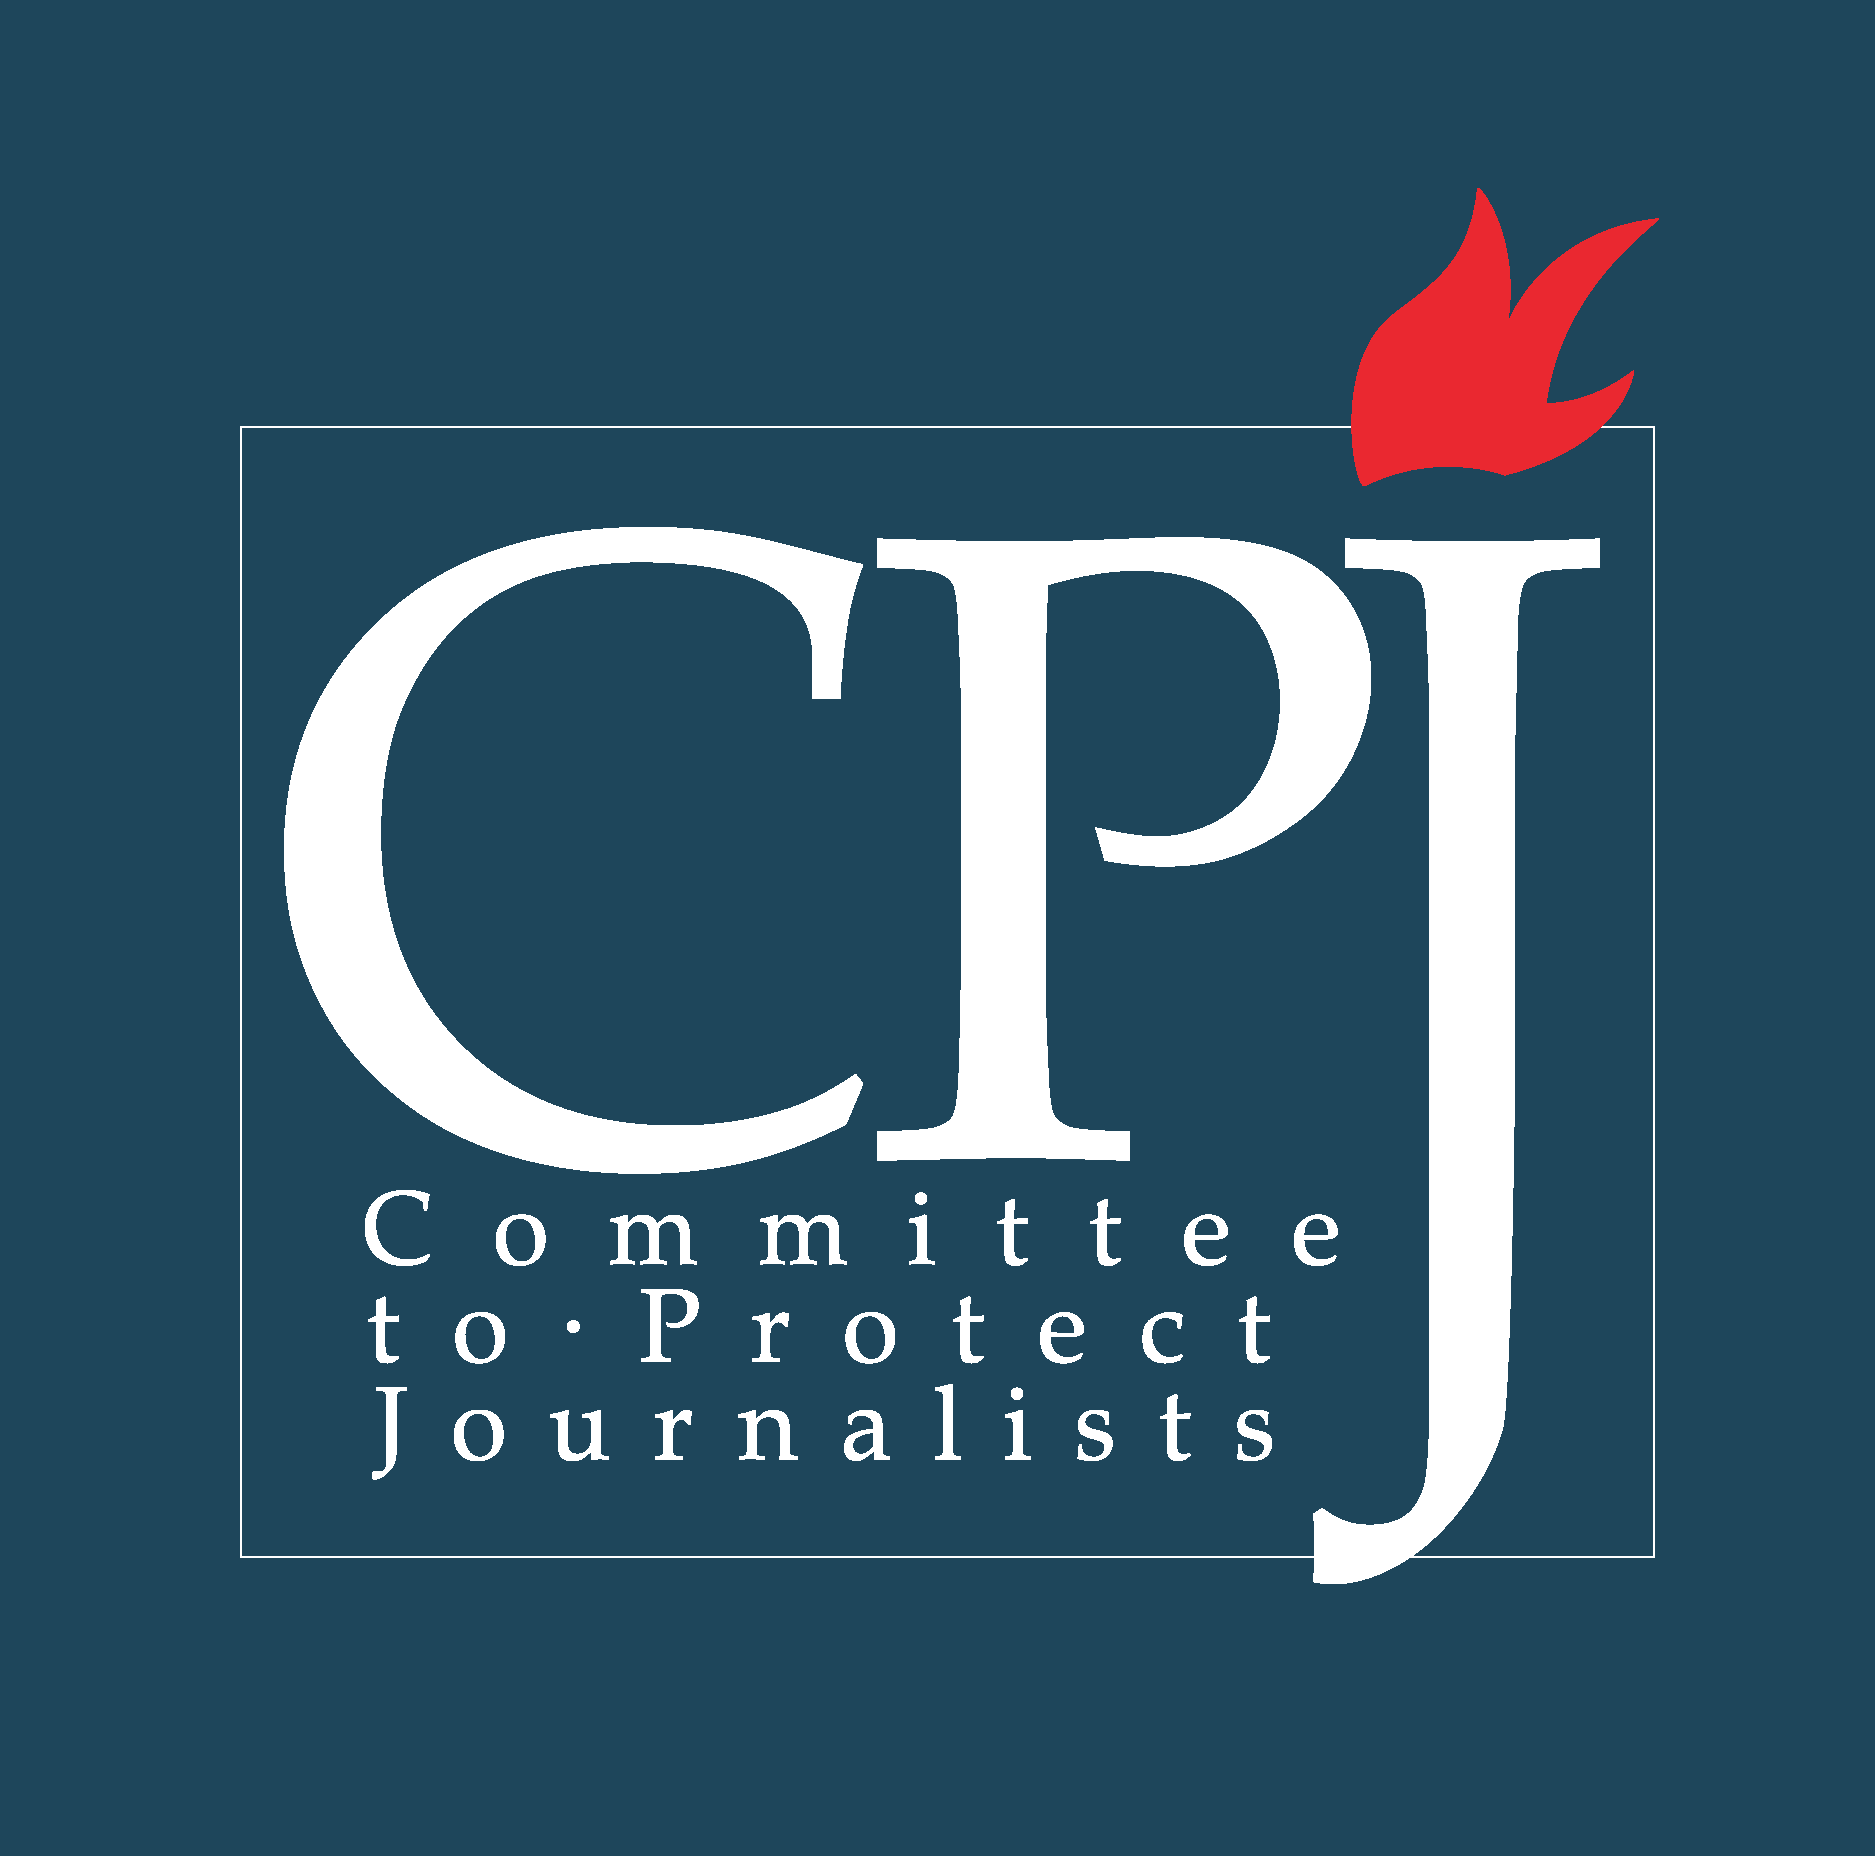 CPJ Logo Vector